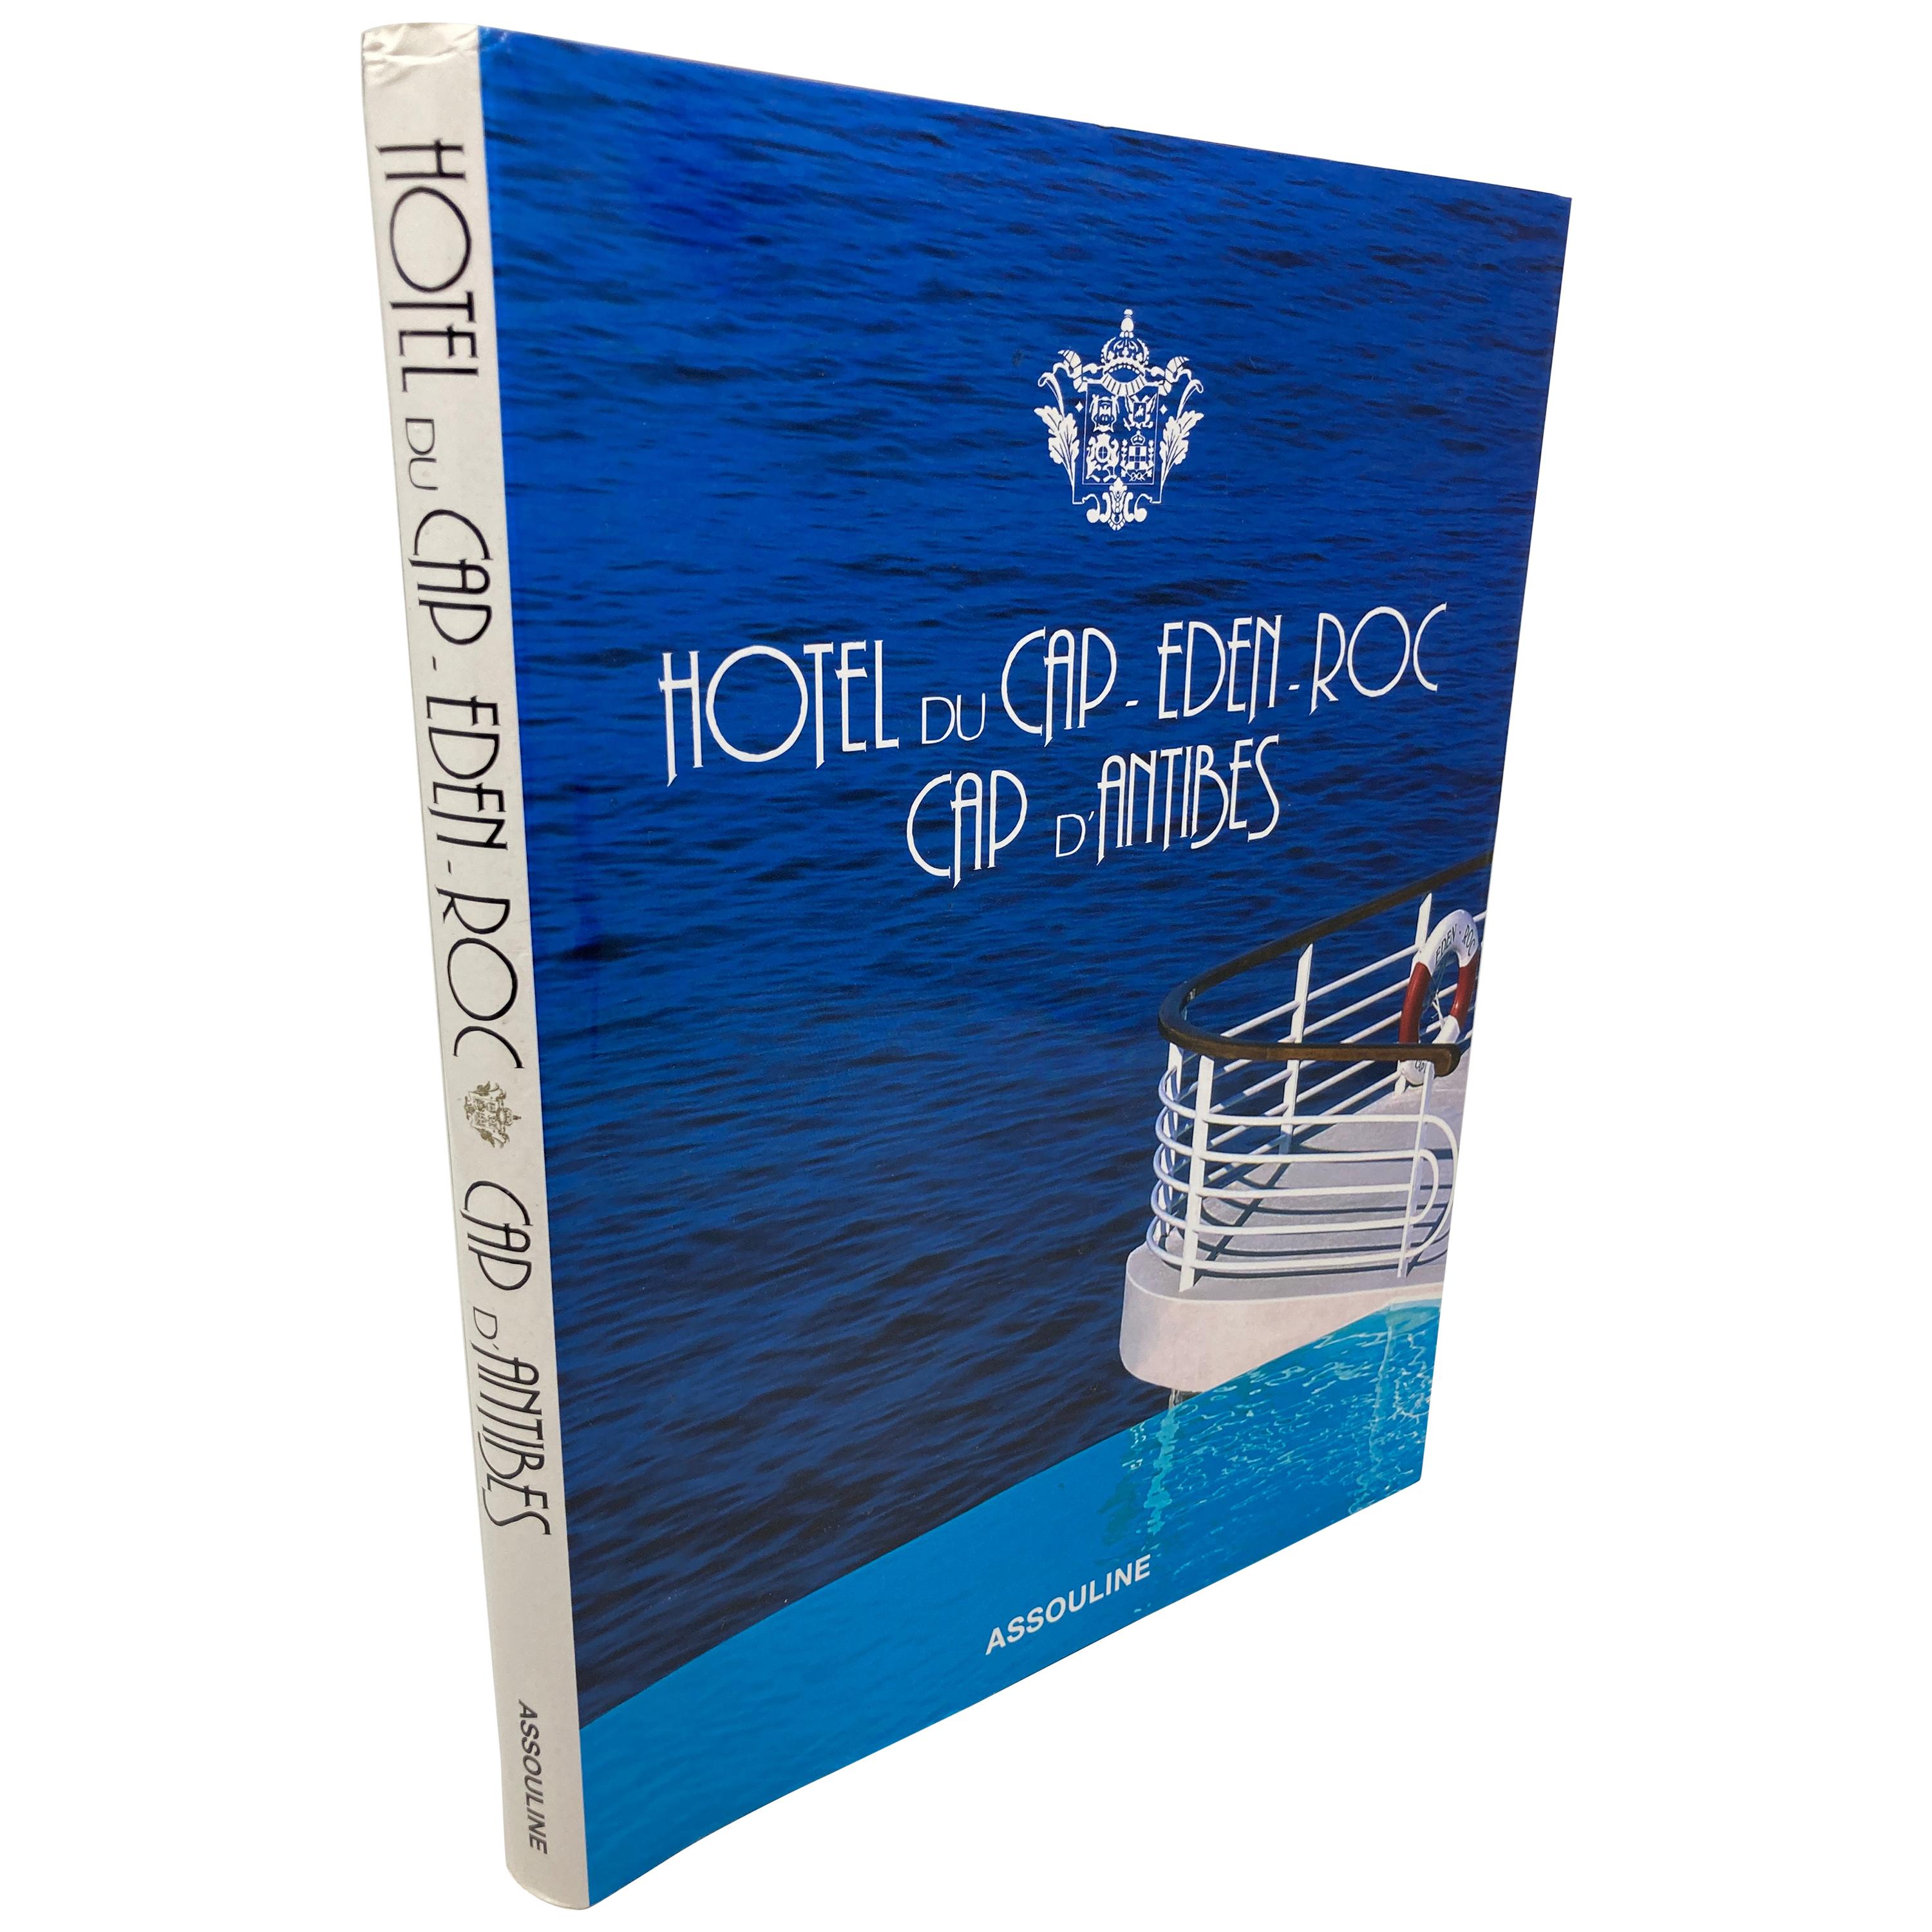 Hotel Du Cap-Eden-Roc Cap d' Antibes Hardcover Book Assouline